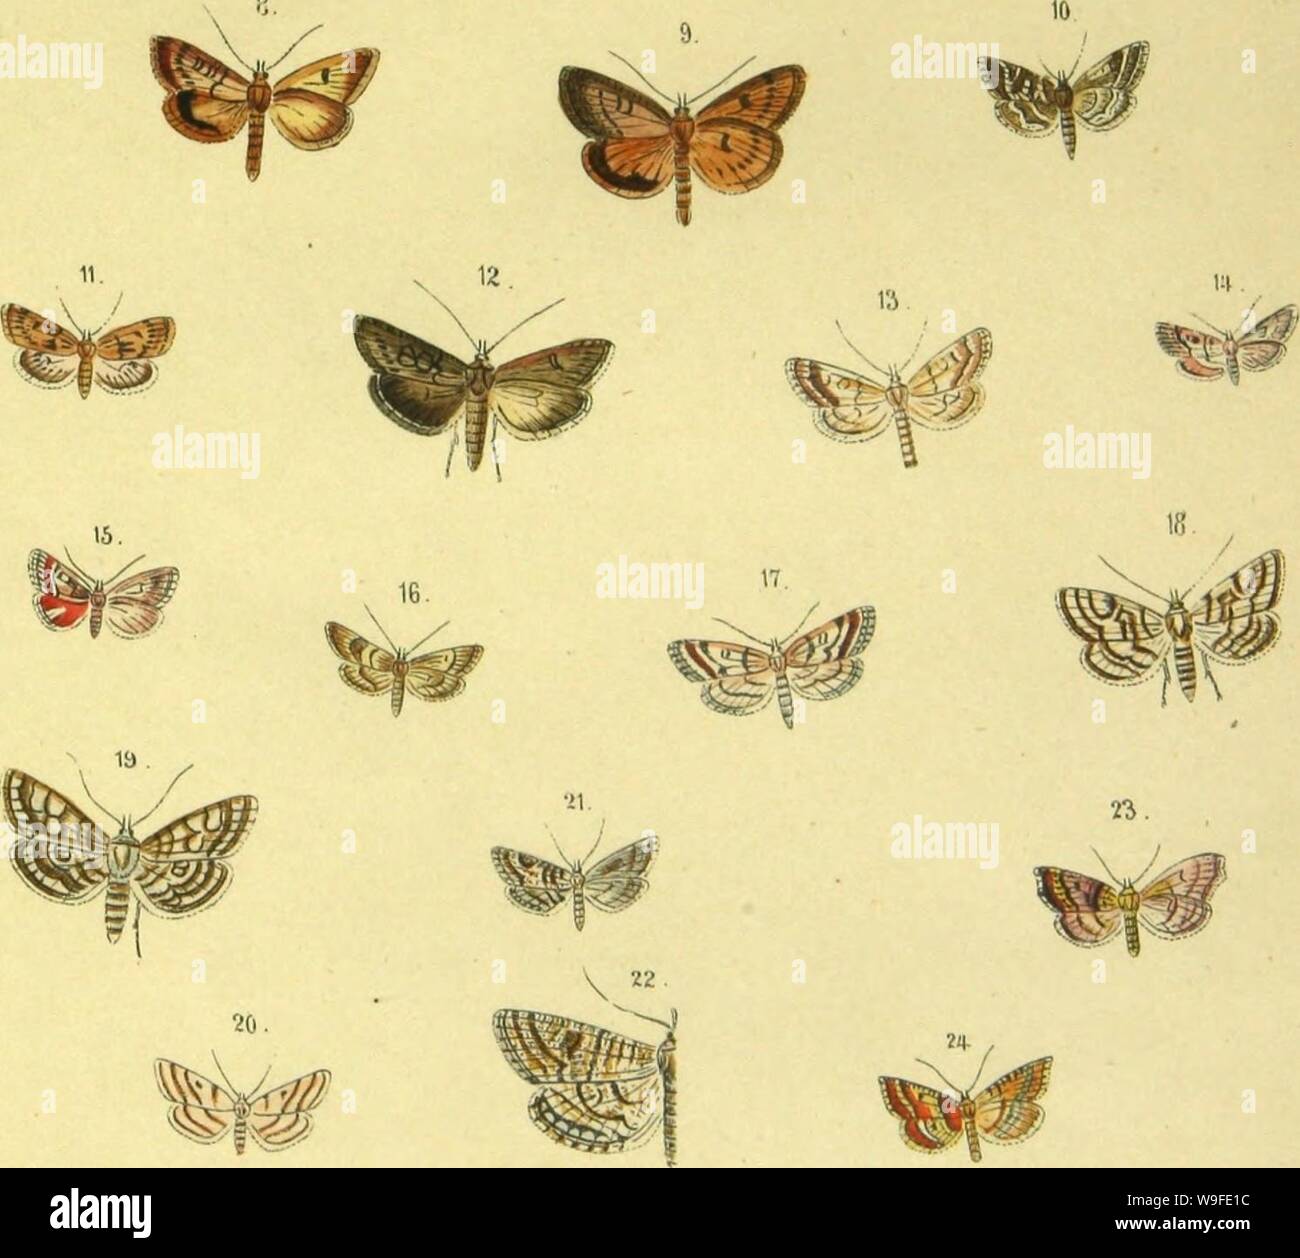 Archive image from page 34 of Abbildung und Beschreibung europäischer Schmetterlinge. Abbildung und Beschreibung europäischer Schmetterlinge in systematischer Reihenfolge  CUbiodiversity1127183 Year: 1858 ( V 8    /yi/tUiiri!!a/J.ym/iZ£&lt;tAj. /fi/JamihaJ. lf7fu&gt;Ttt/t. 2&gt;,J'/a,-n77neu Stock Photo